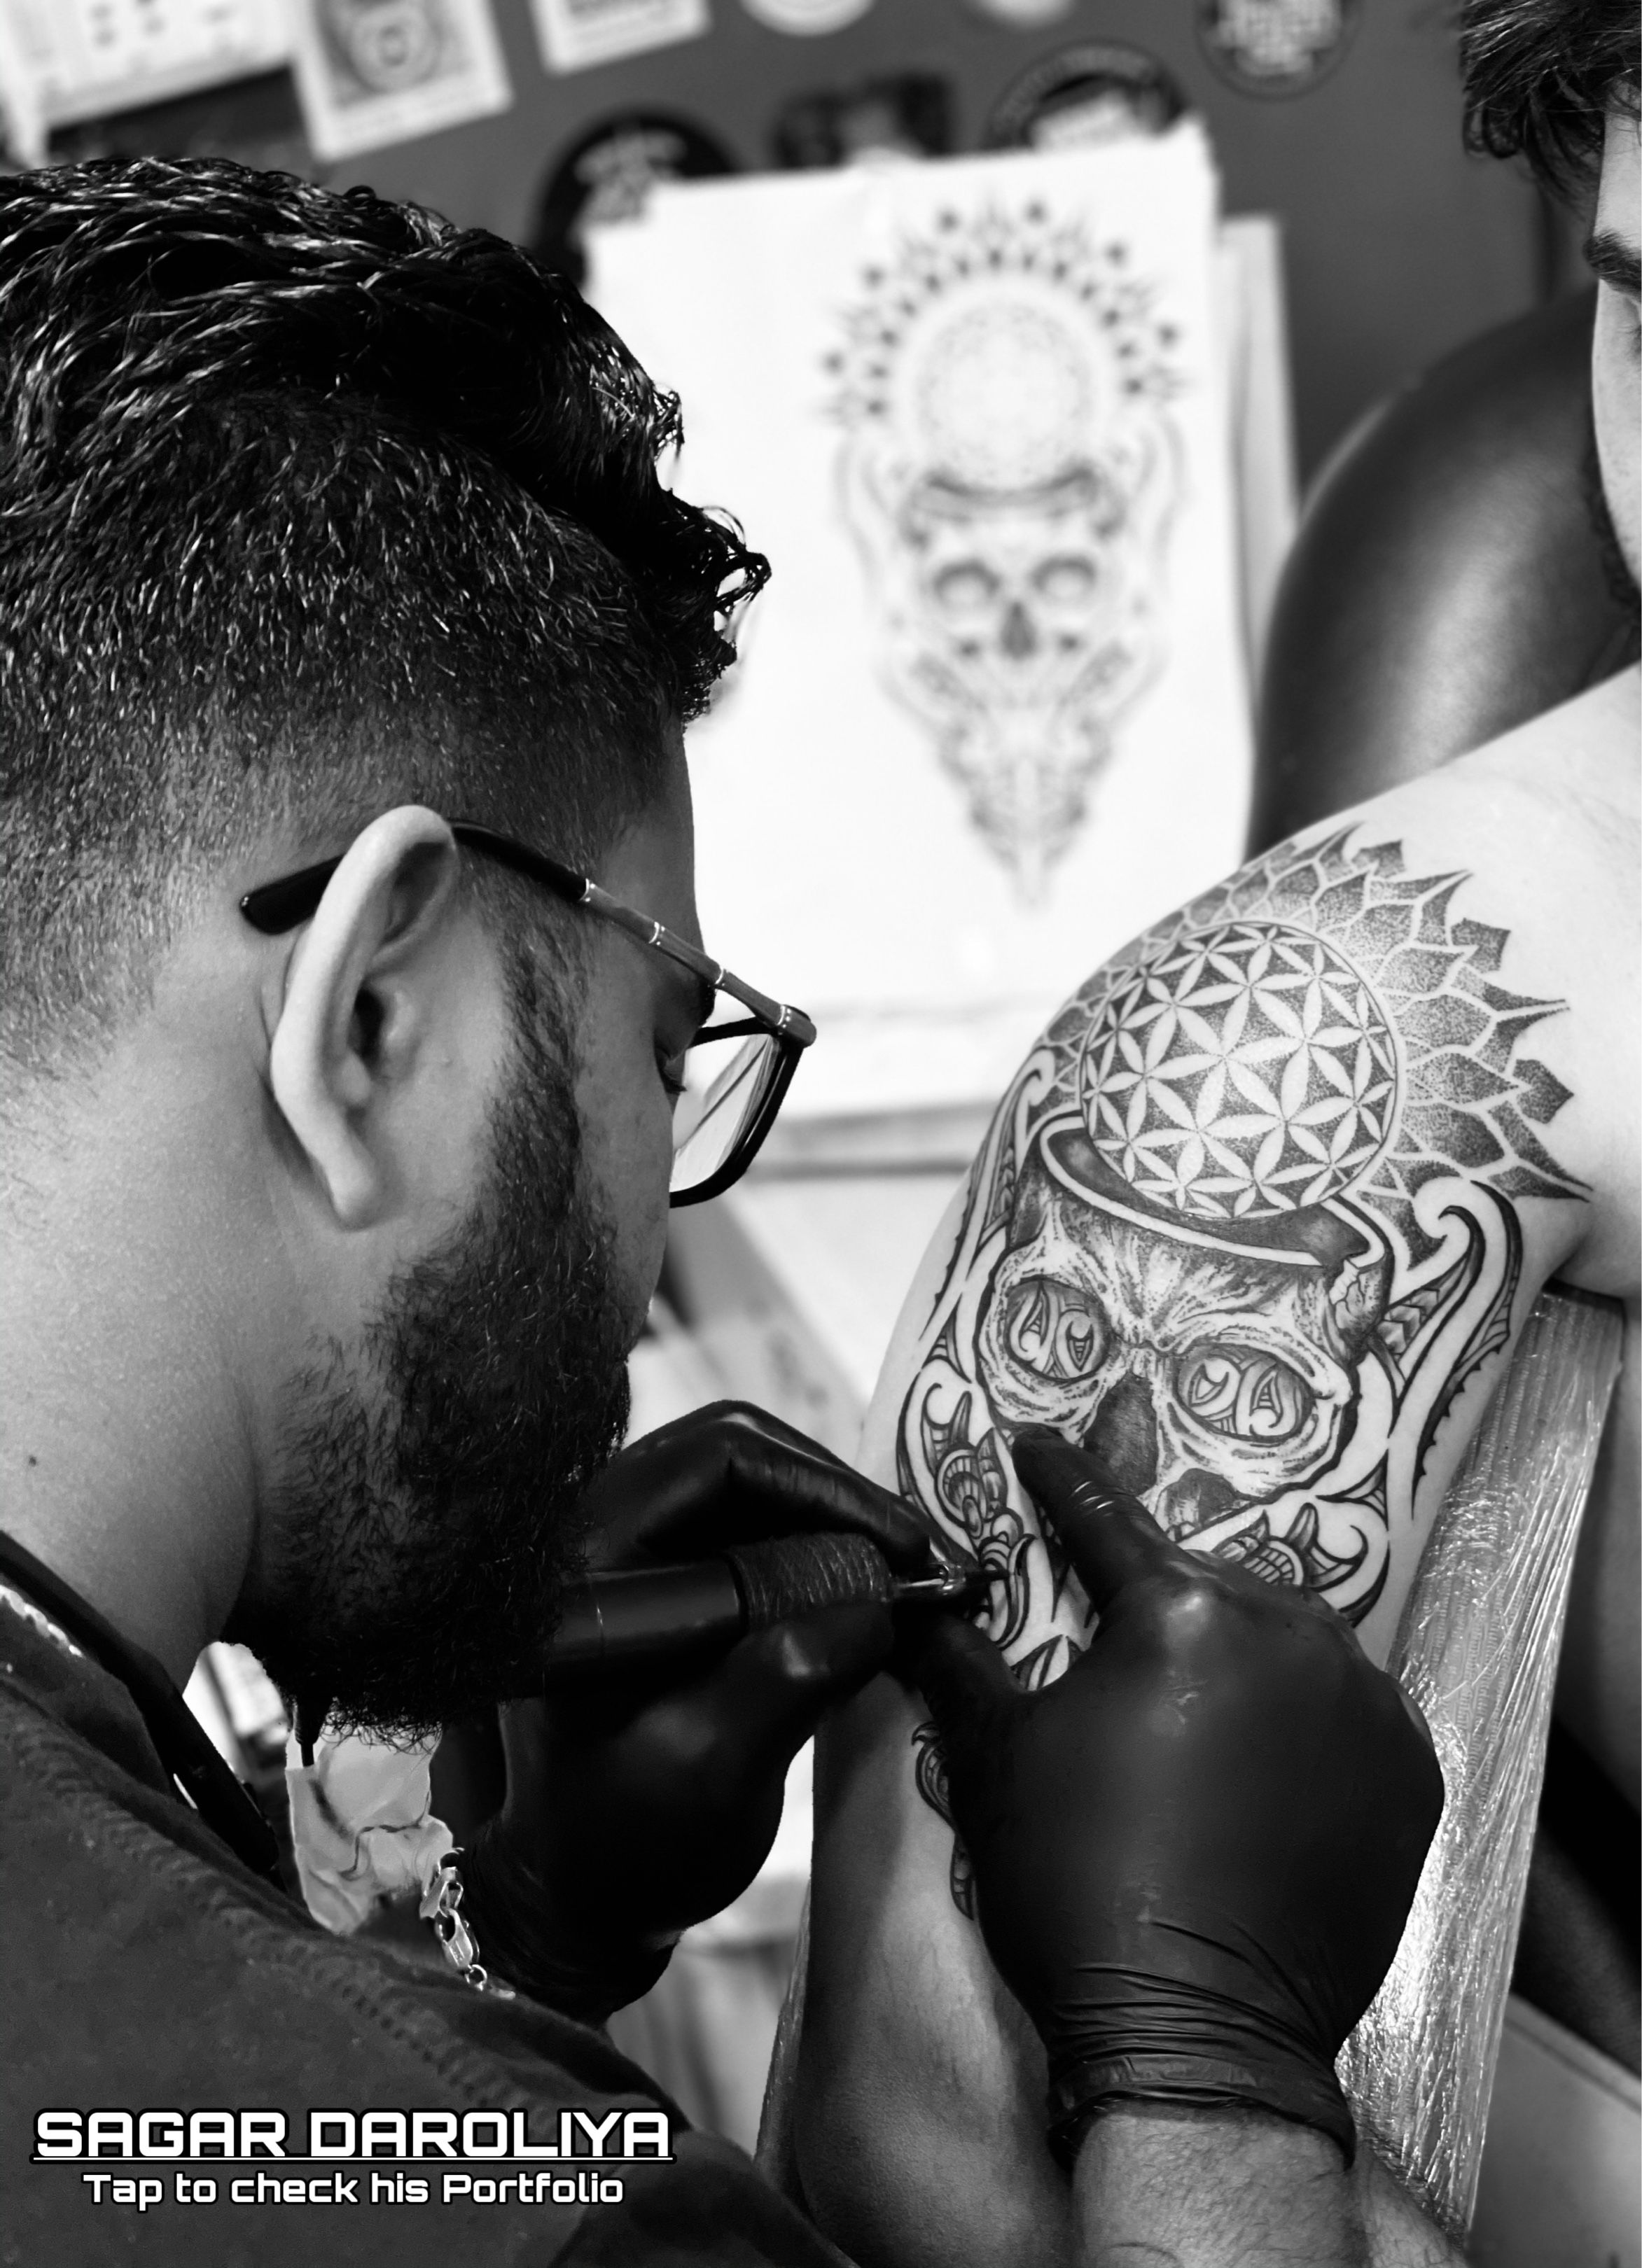 Lord Shiva Tattoo By Mukesh Waghela Best Tattoo Artist In Goa At Moksha  Tattoo Studio Goa India. - Best Tattoo Studio Goa, Safe, Hygienic - Moksha  Tattoo